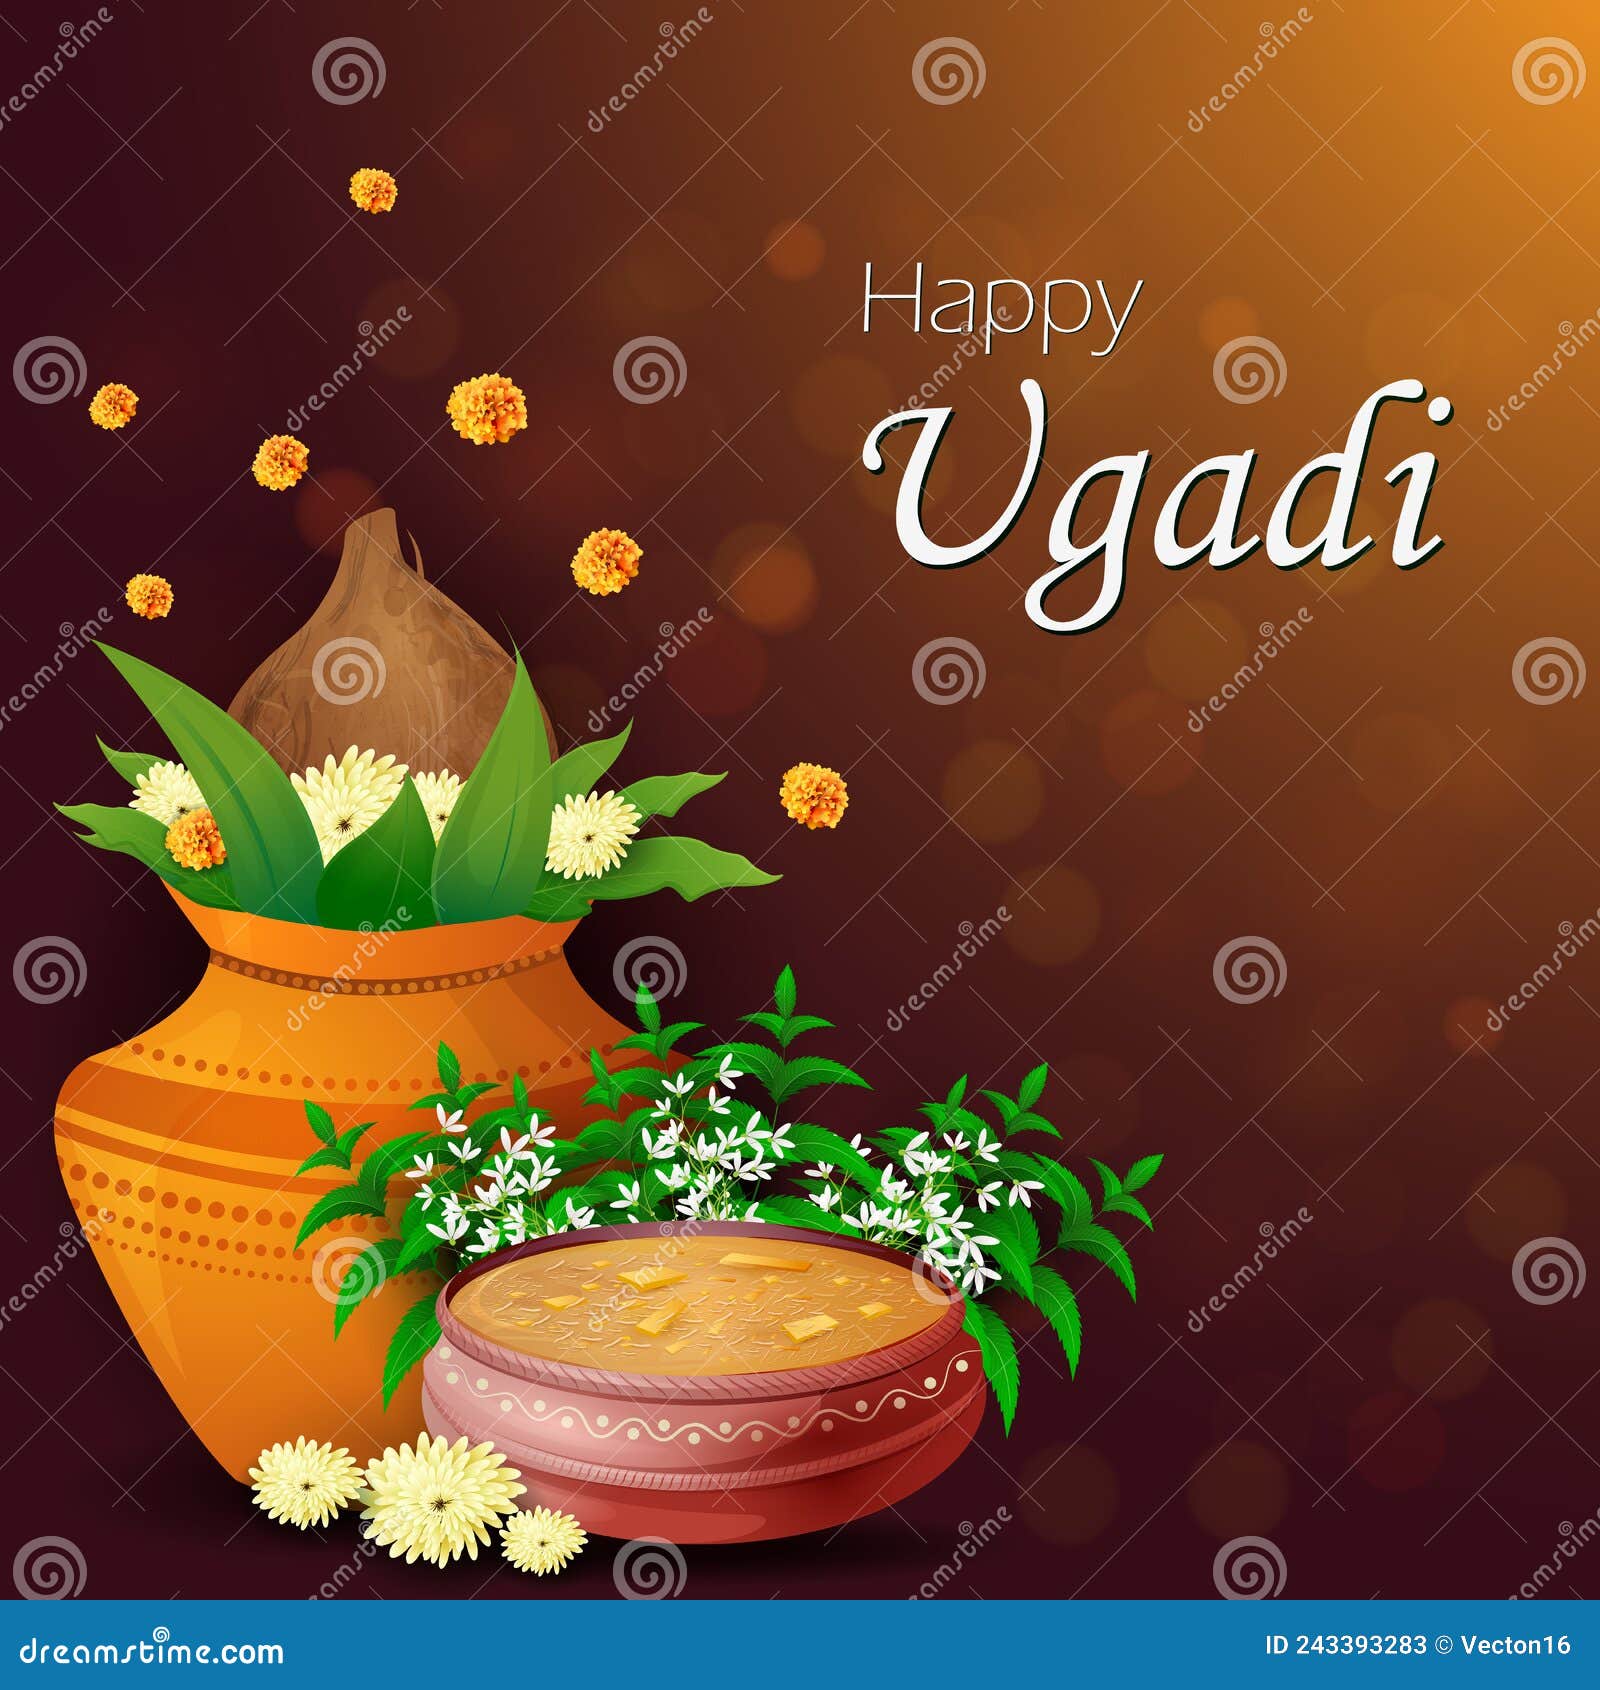 Happy Ugadi New Year S Day Festival of Andhra Pradesh, Telangana, and